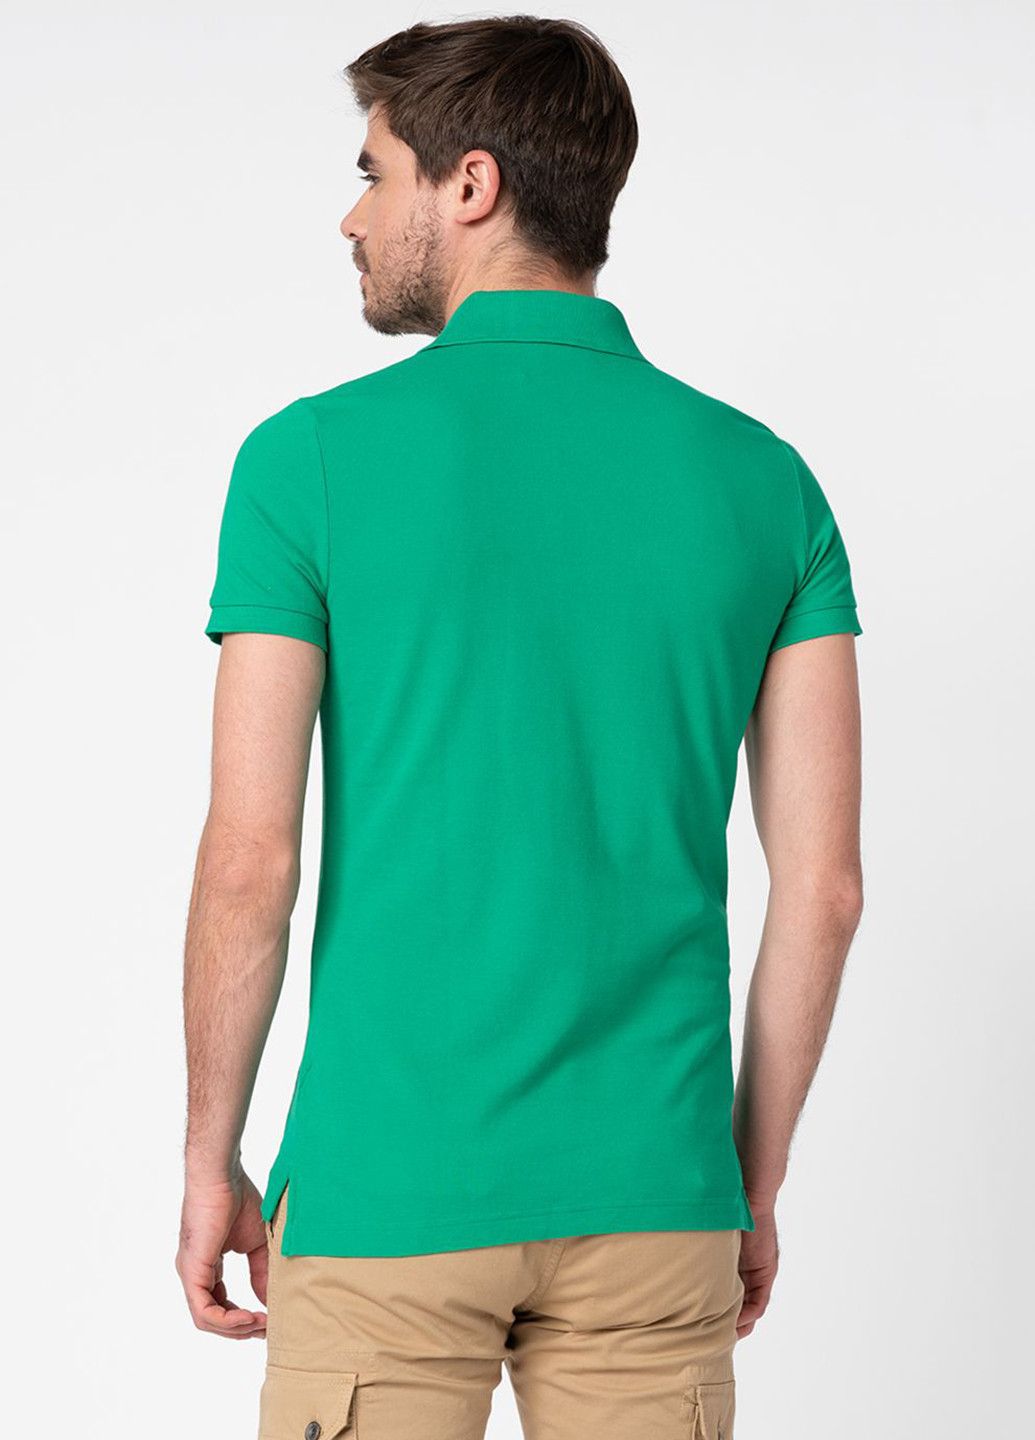 Зеленая футболка-поло для мужчин United Colors of Benetton однотонная